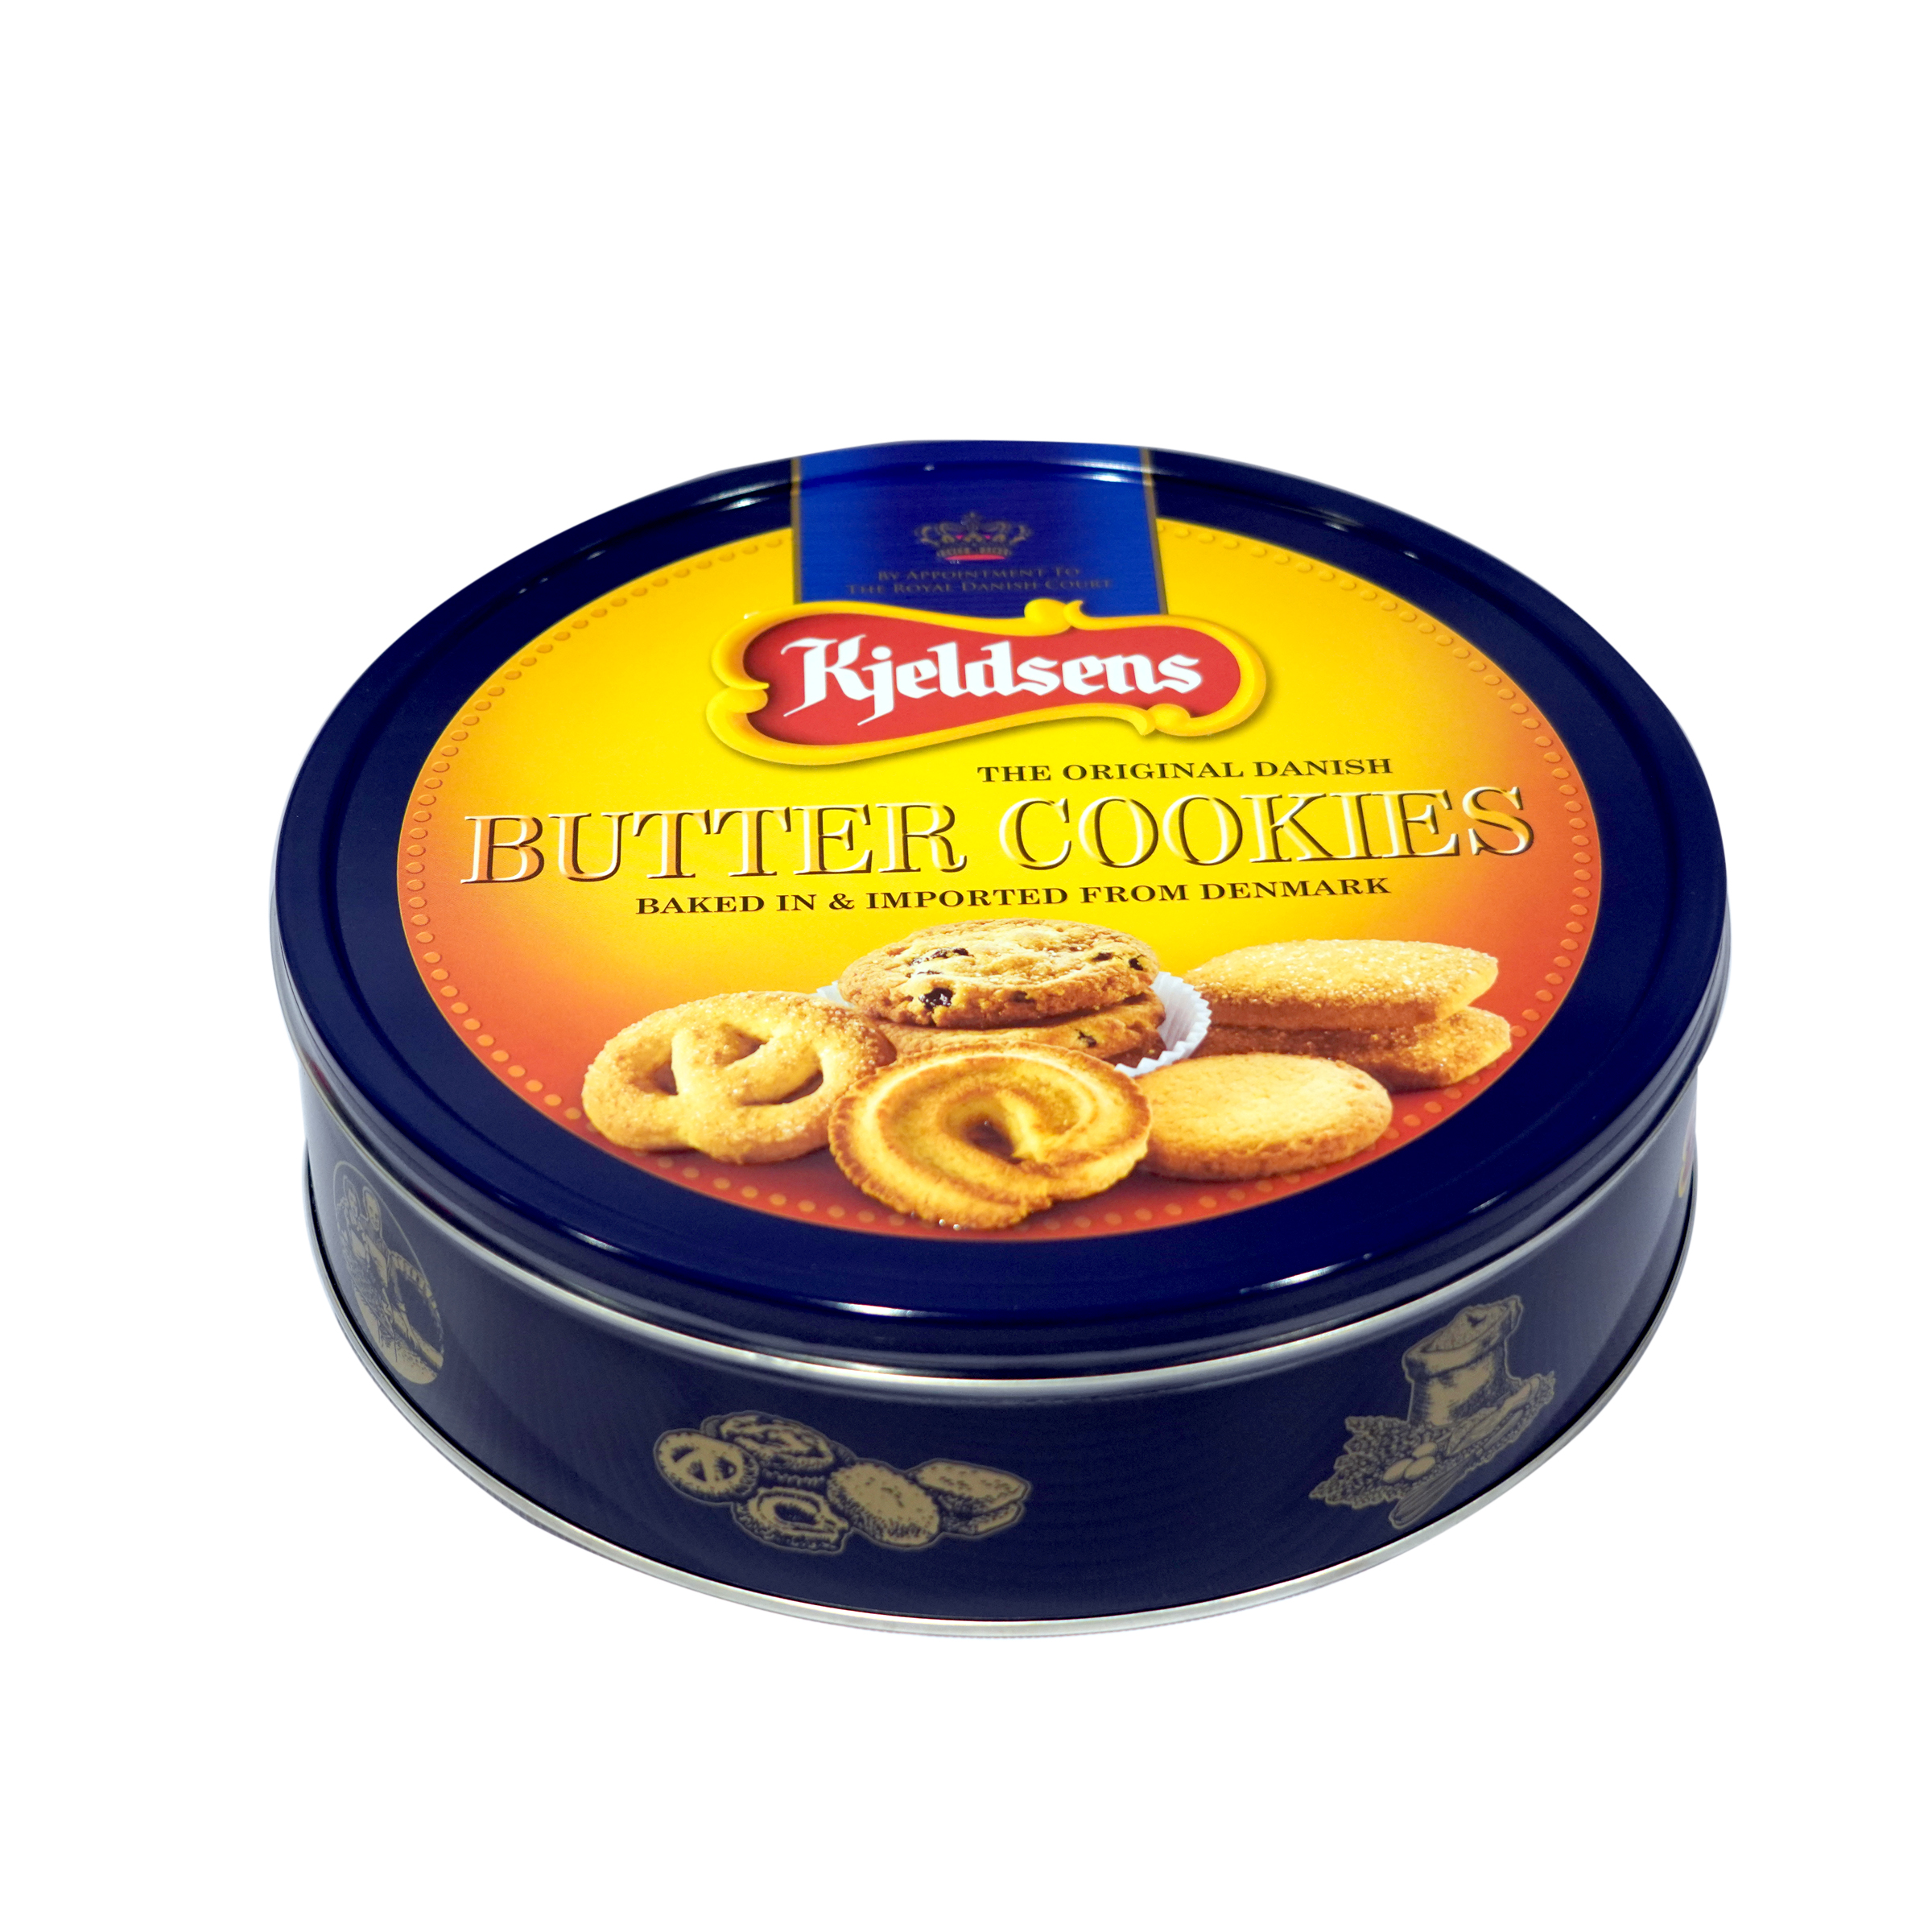 Kjeldsens Butter Cookies (908g)